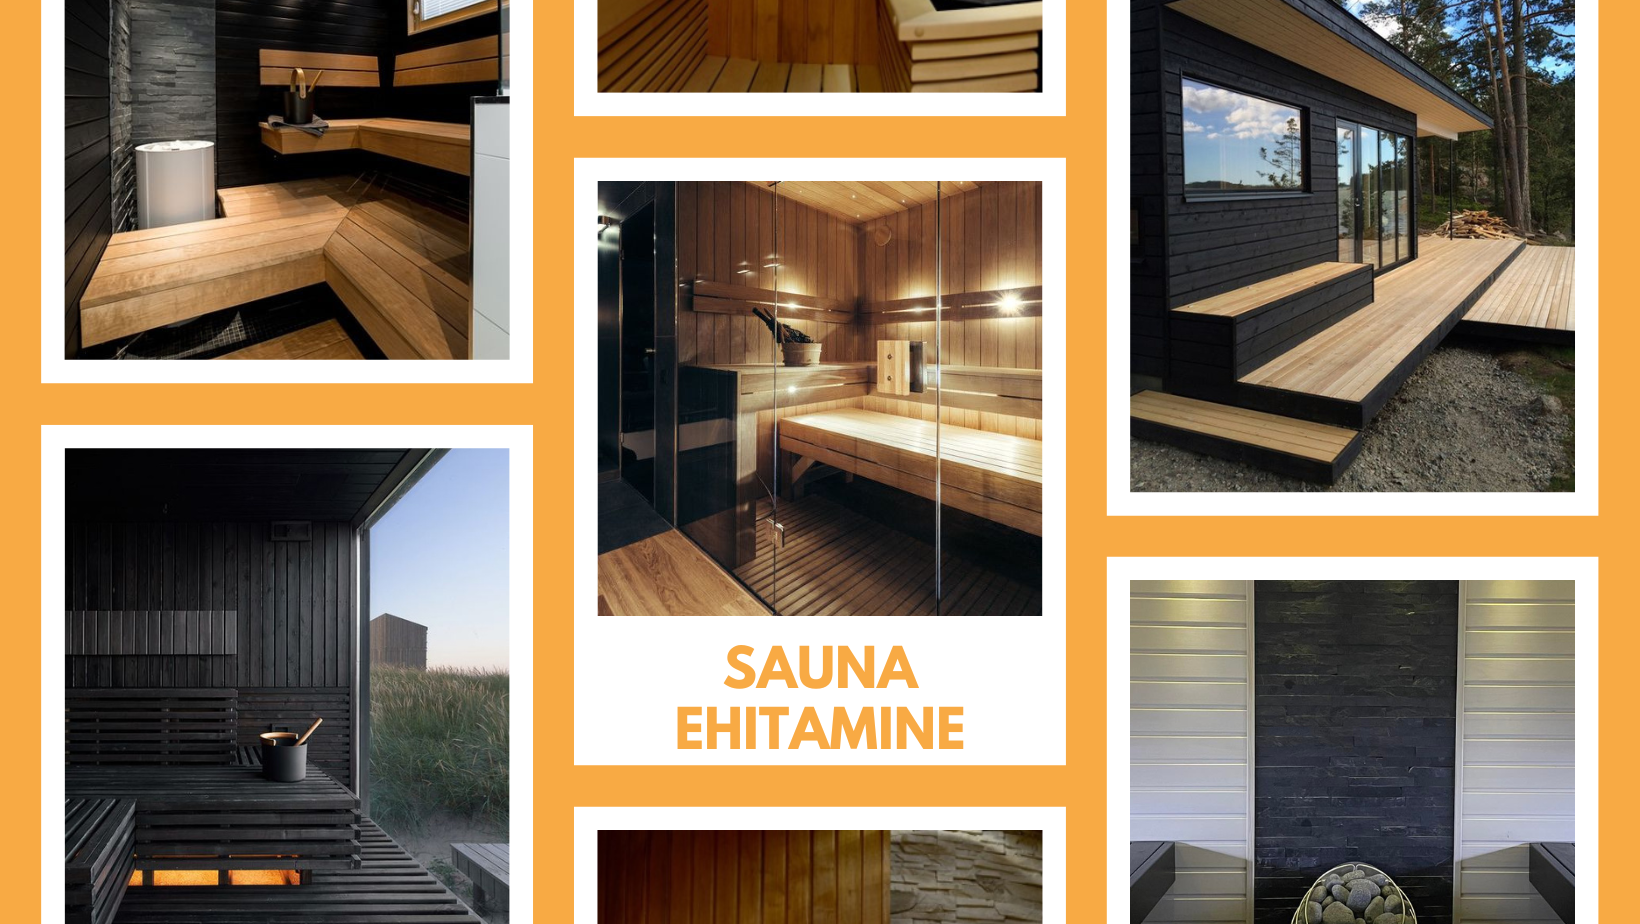 Sauna ehitamine saunavooder